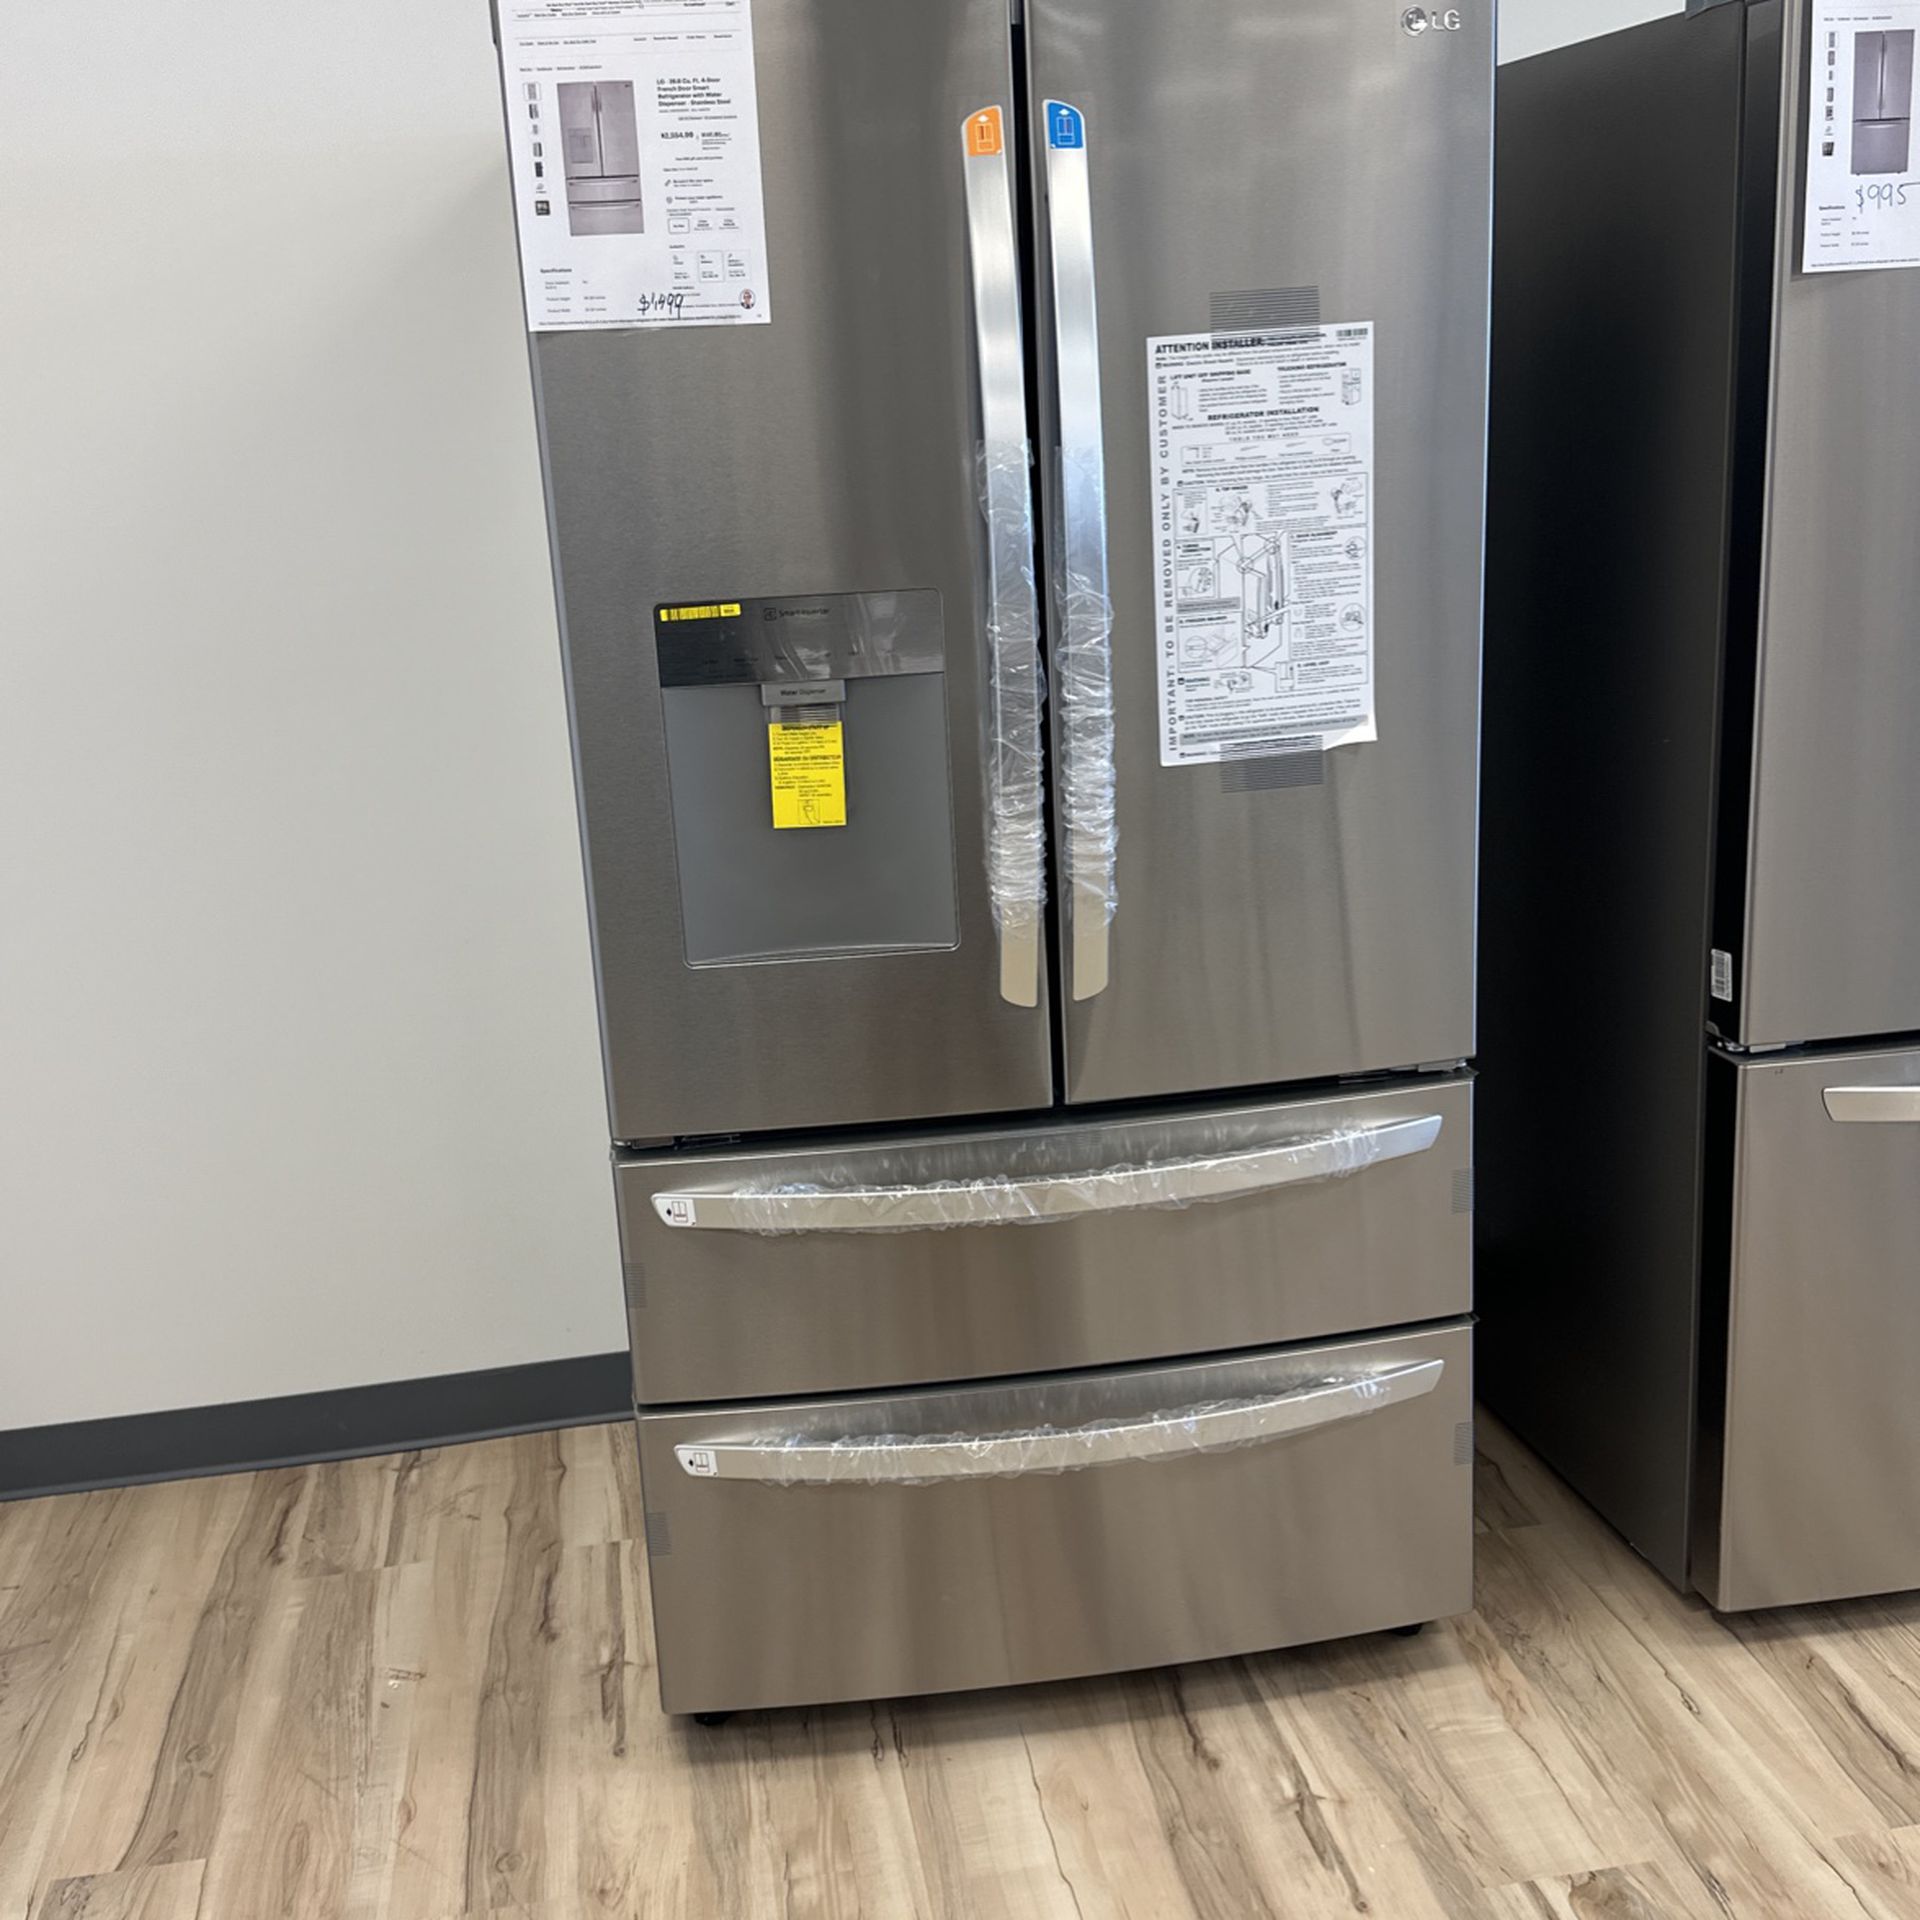 LG 29 cu. ft. French Door Refrigerator